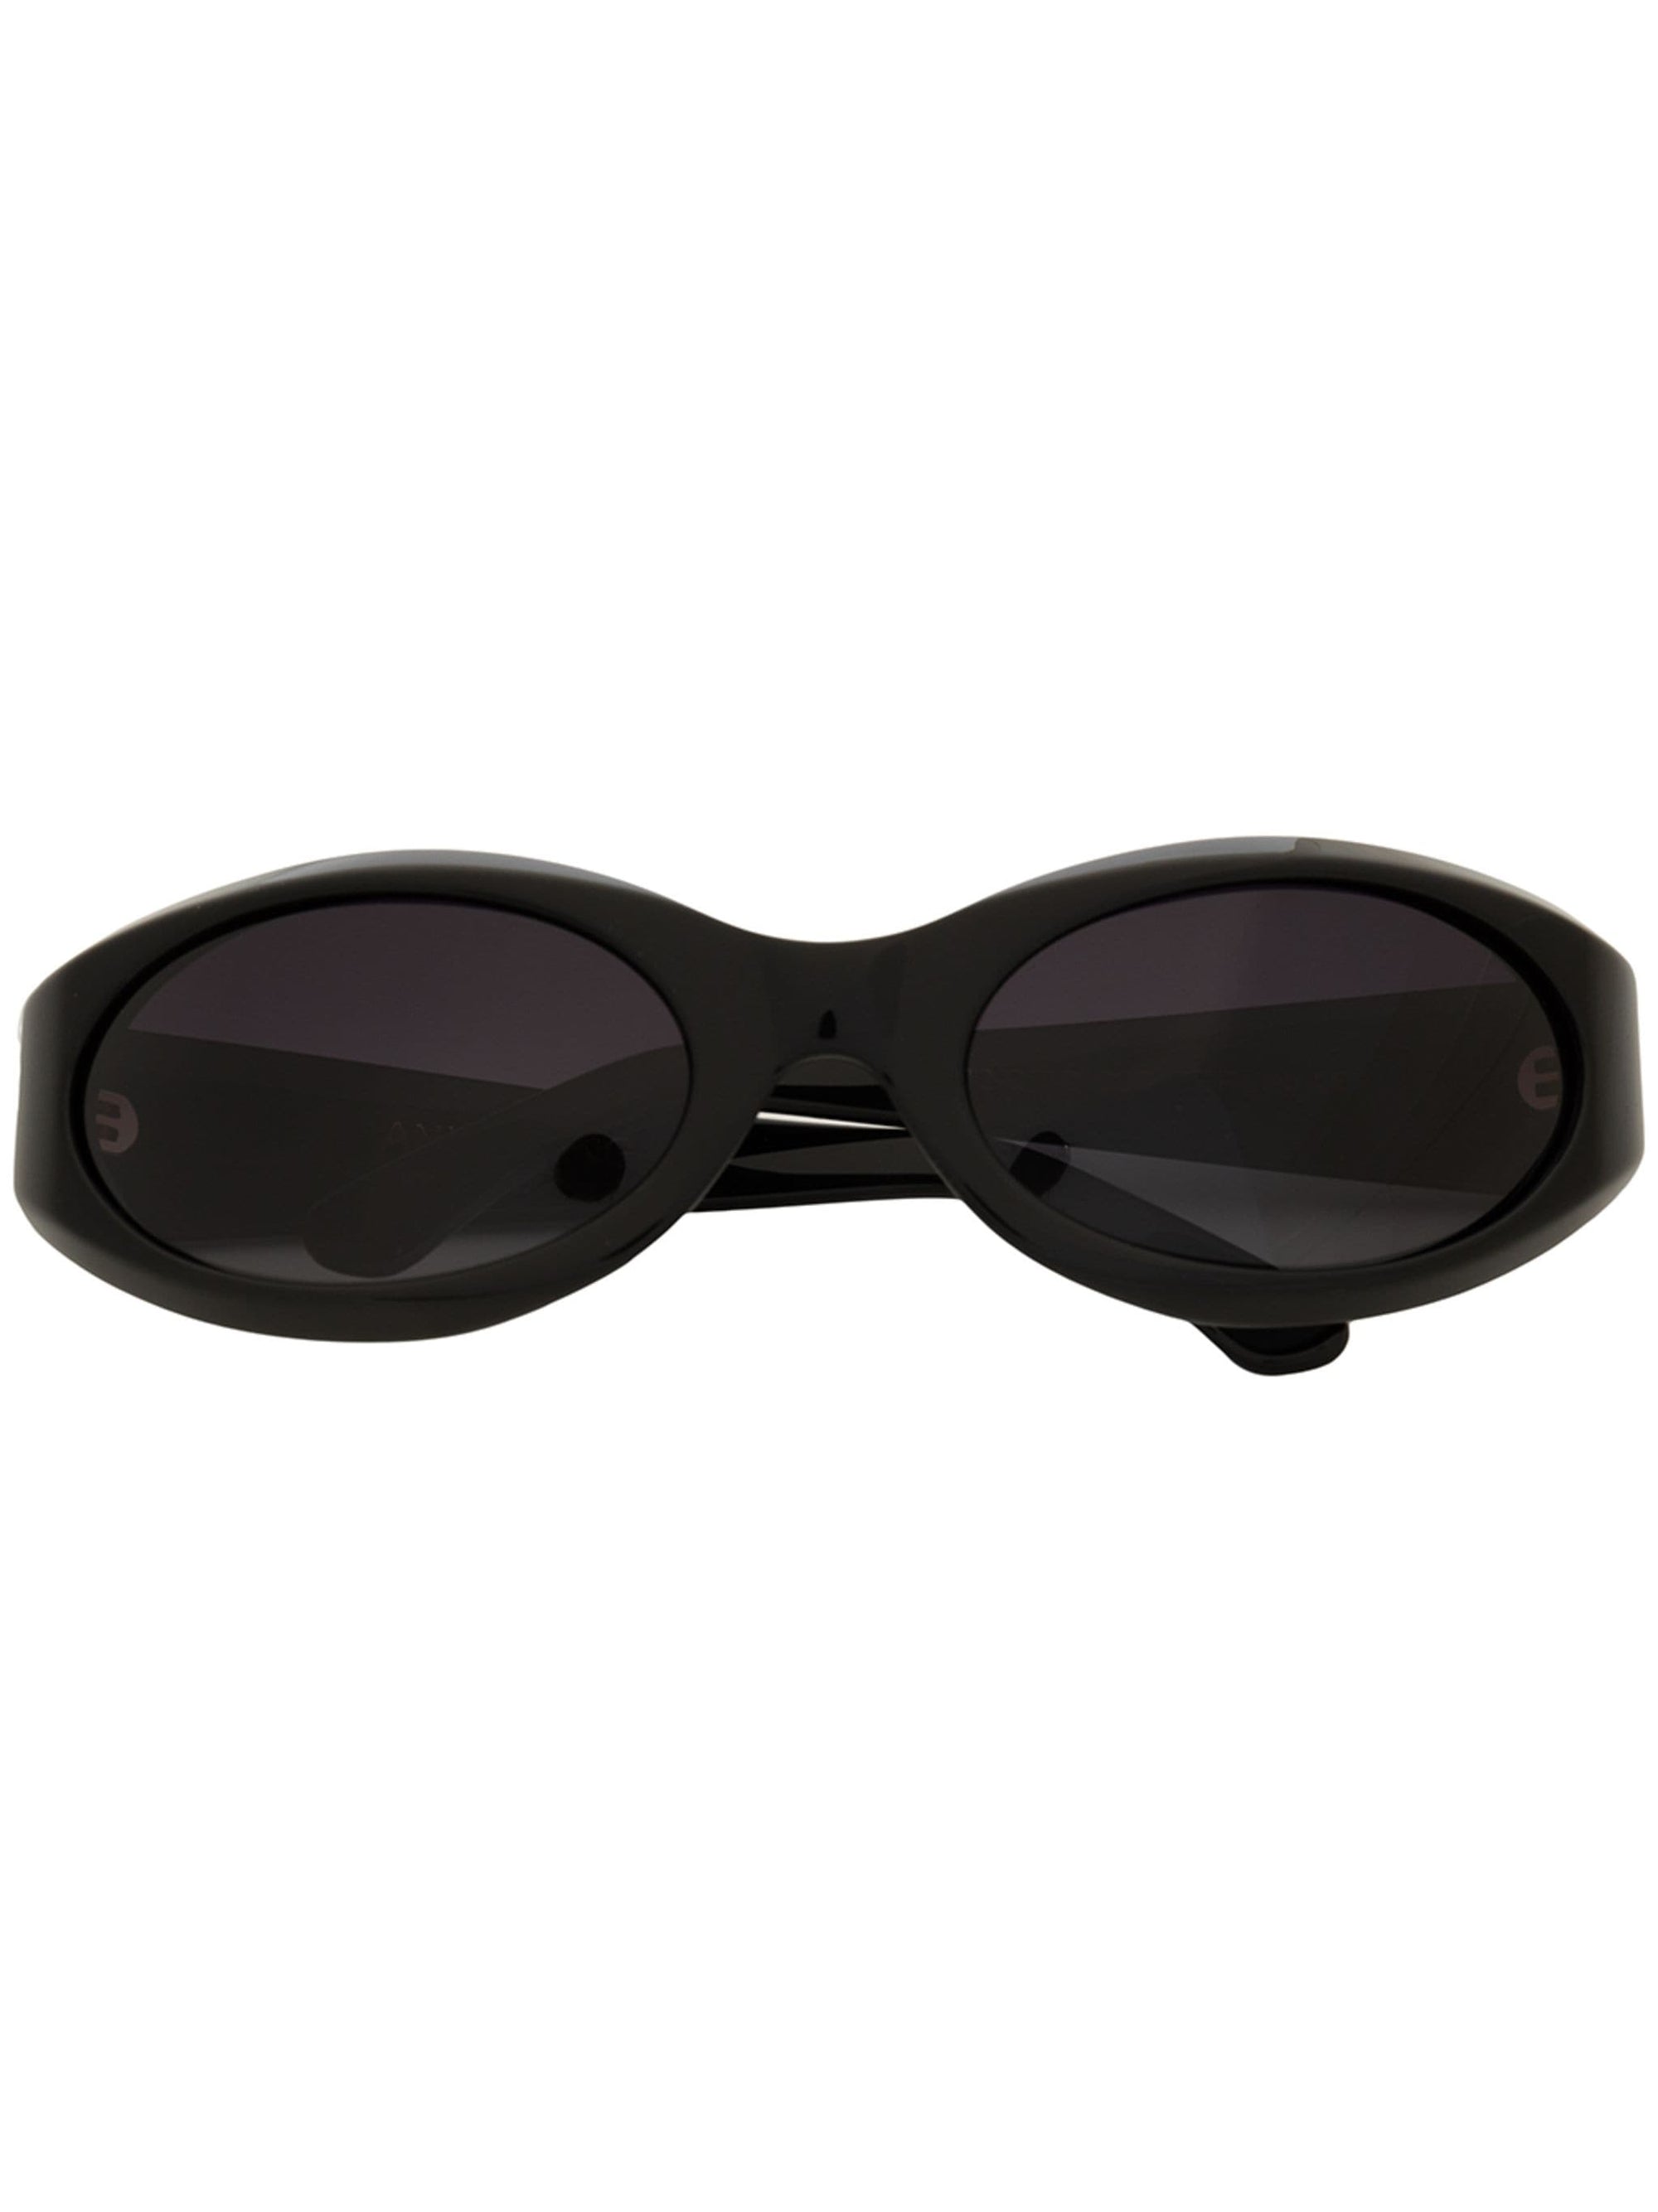 Berlin Slim Oval Sunglasses